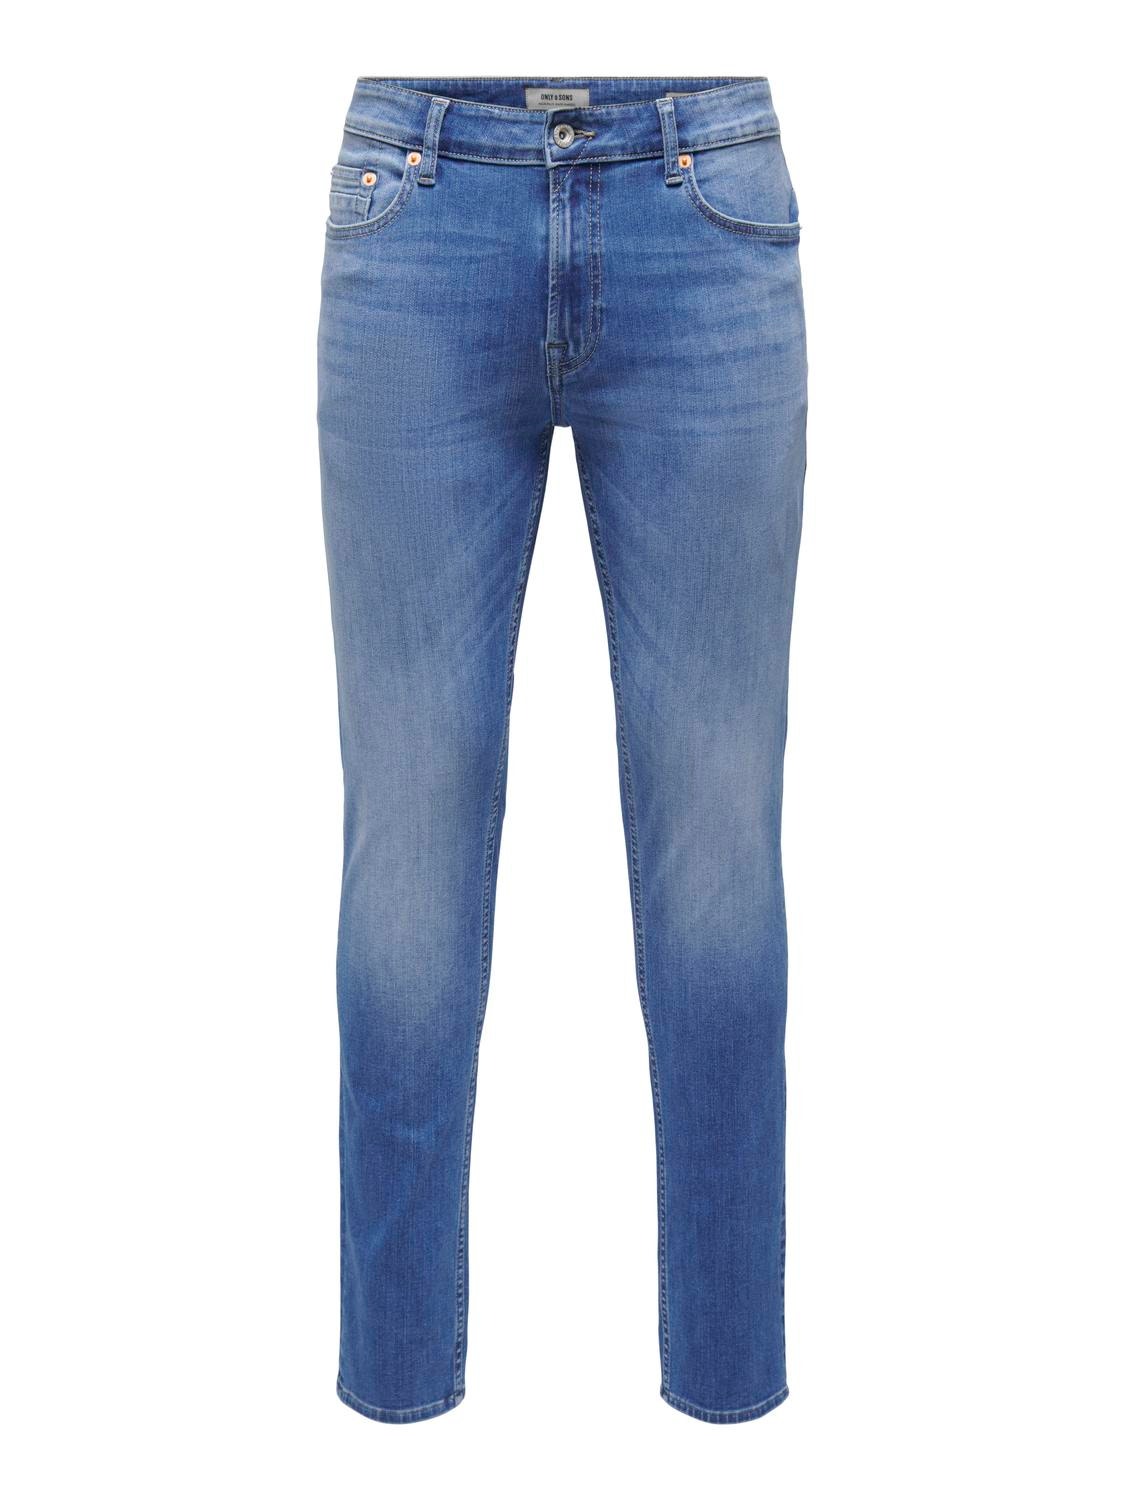 ONLY & SONS onsloom slim light blue 4076 jeans -Light Blue Denim - 22024076